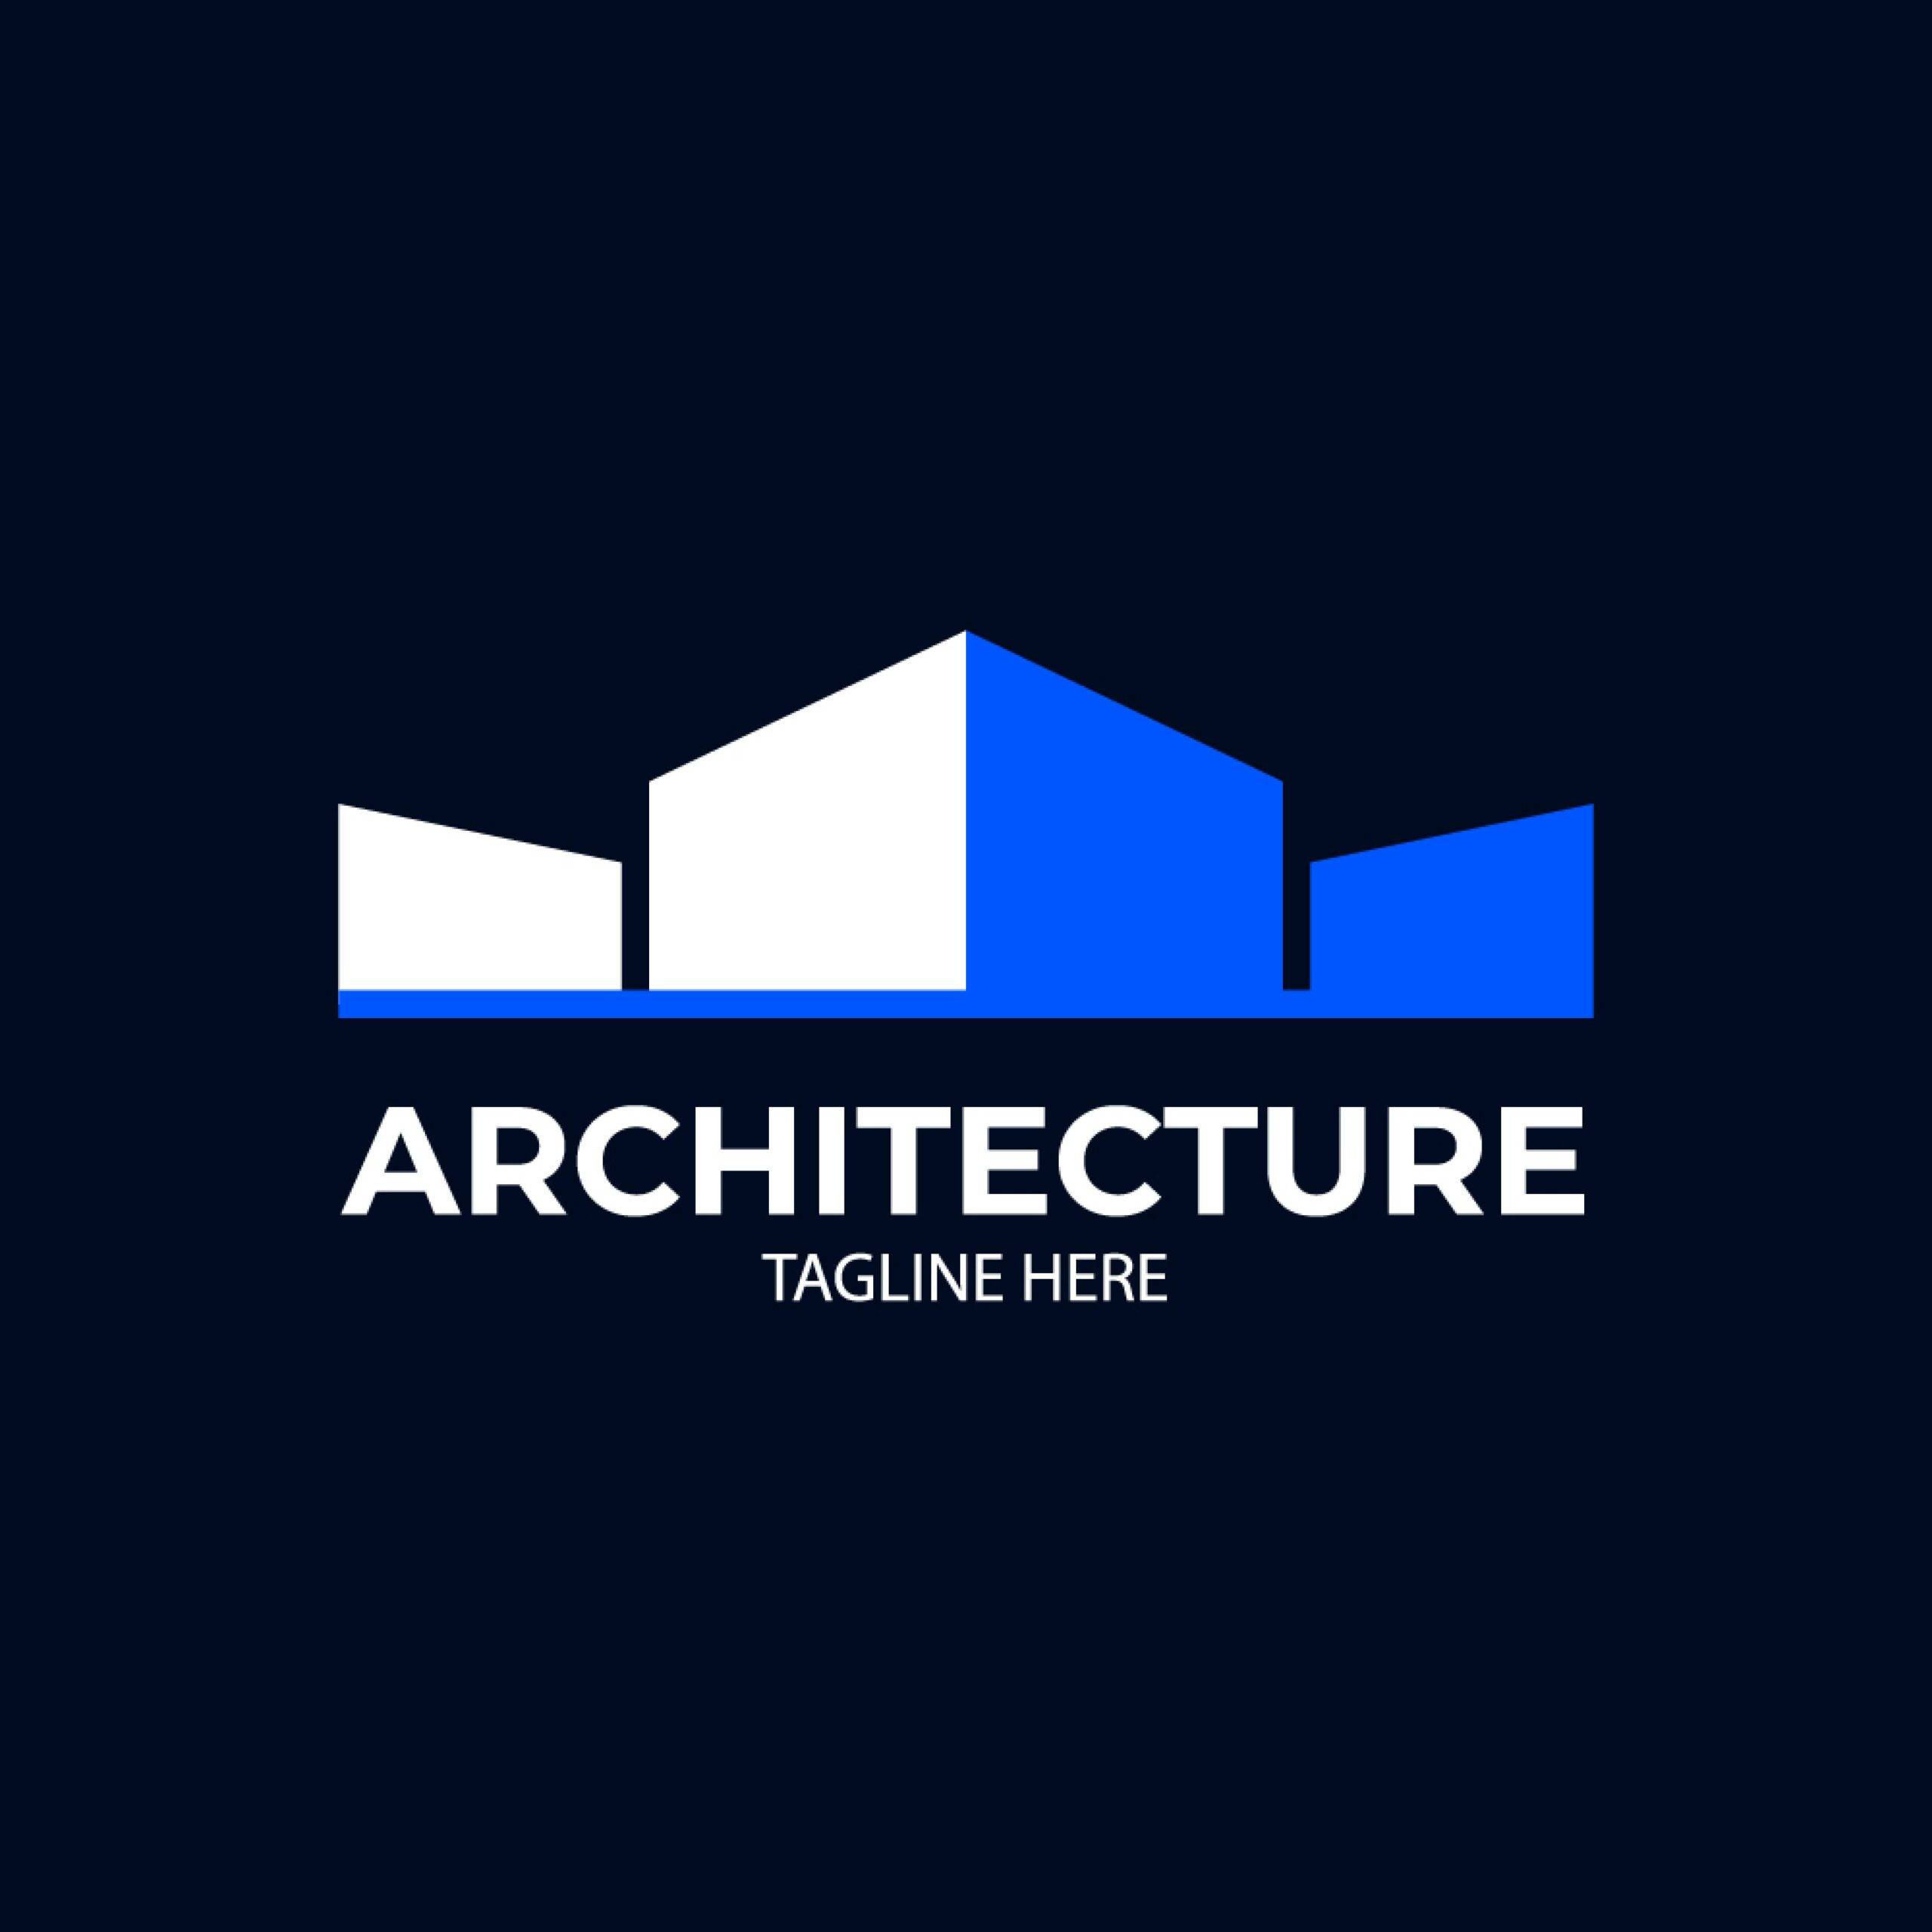 Architecture logo design templates